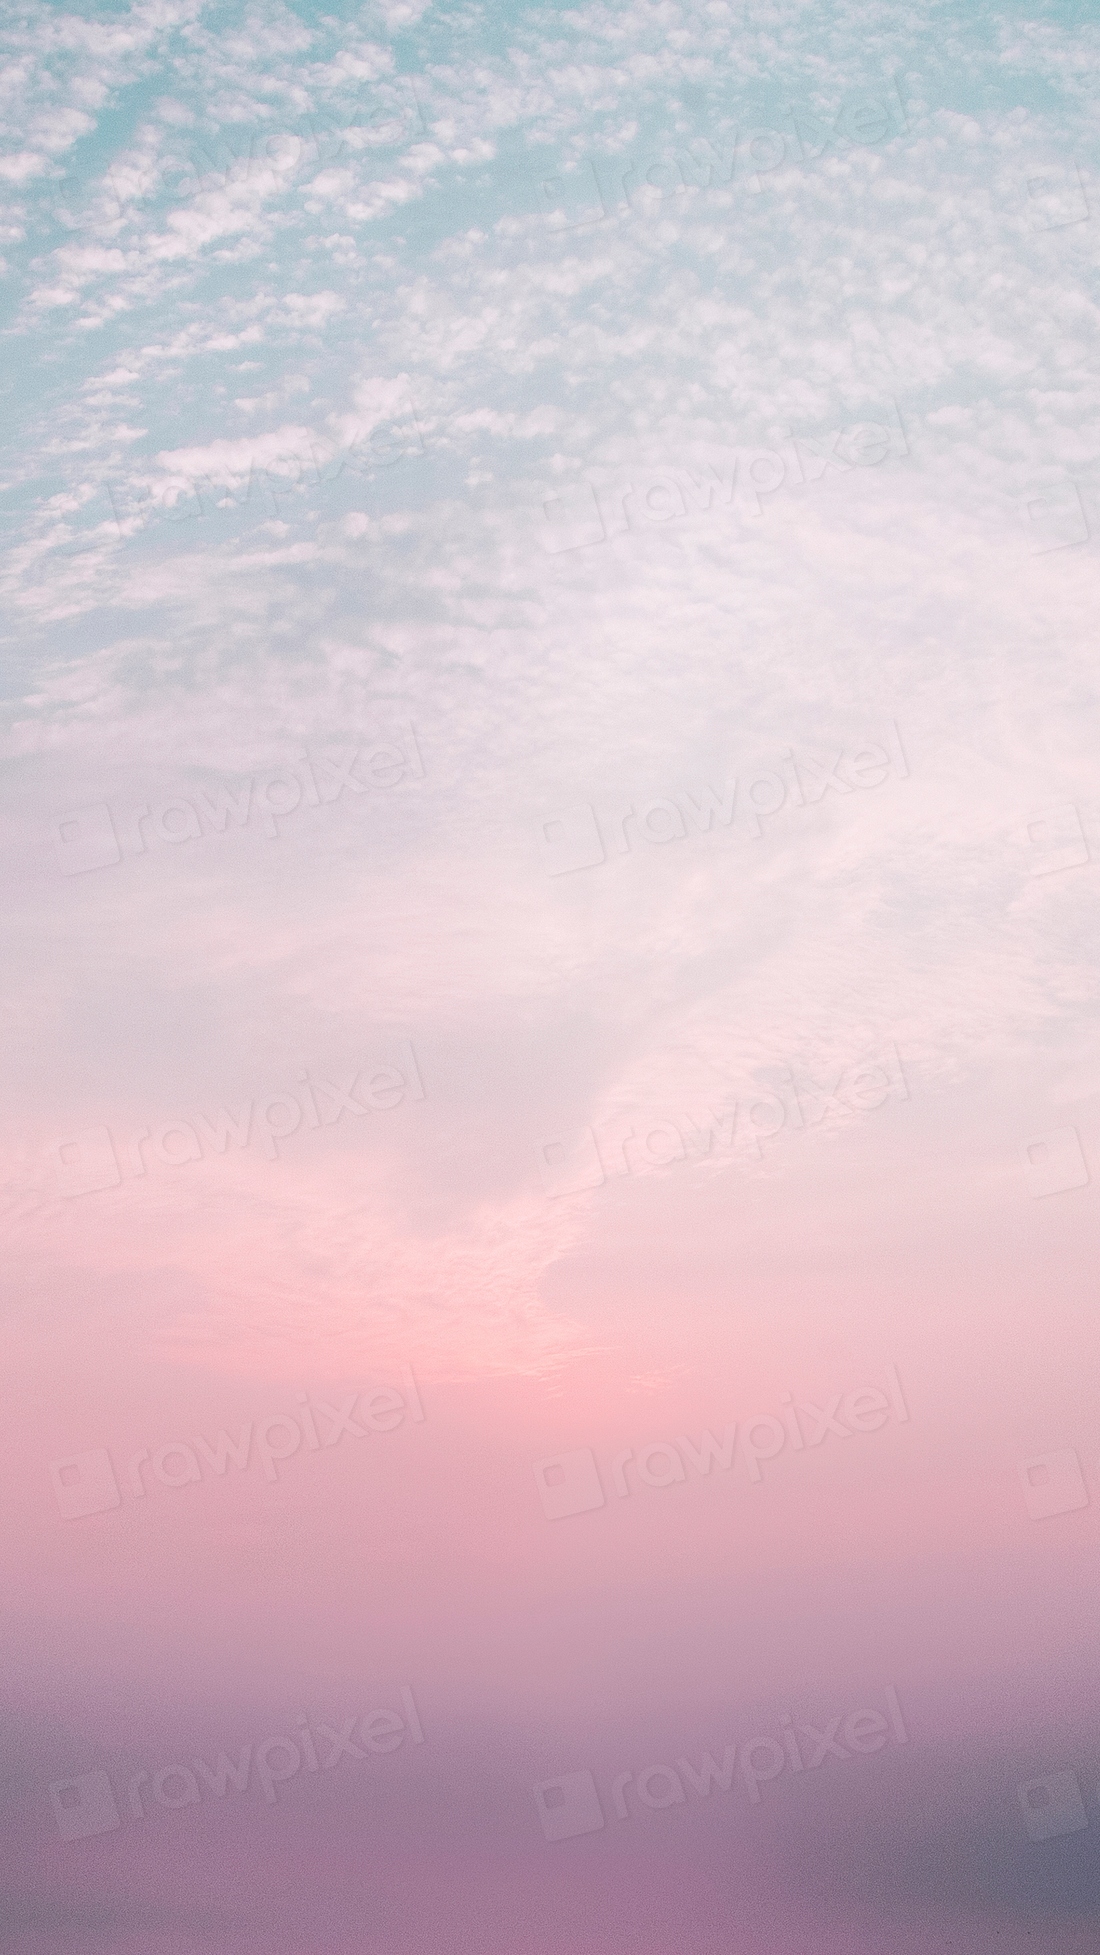 Evening sky setting sun wallpaper | Premium Photo - rawpixel